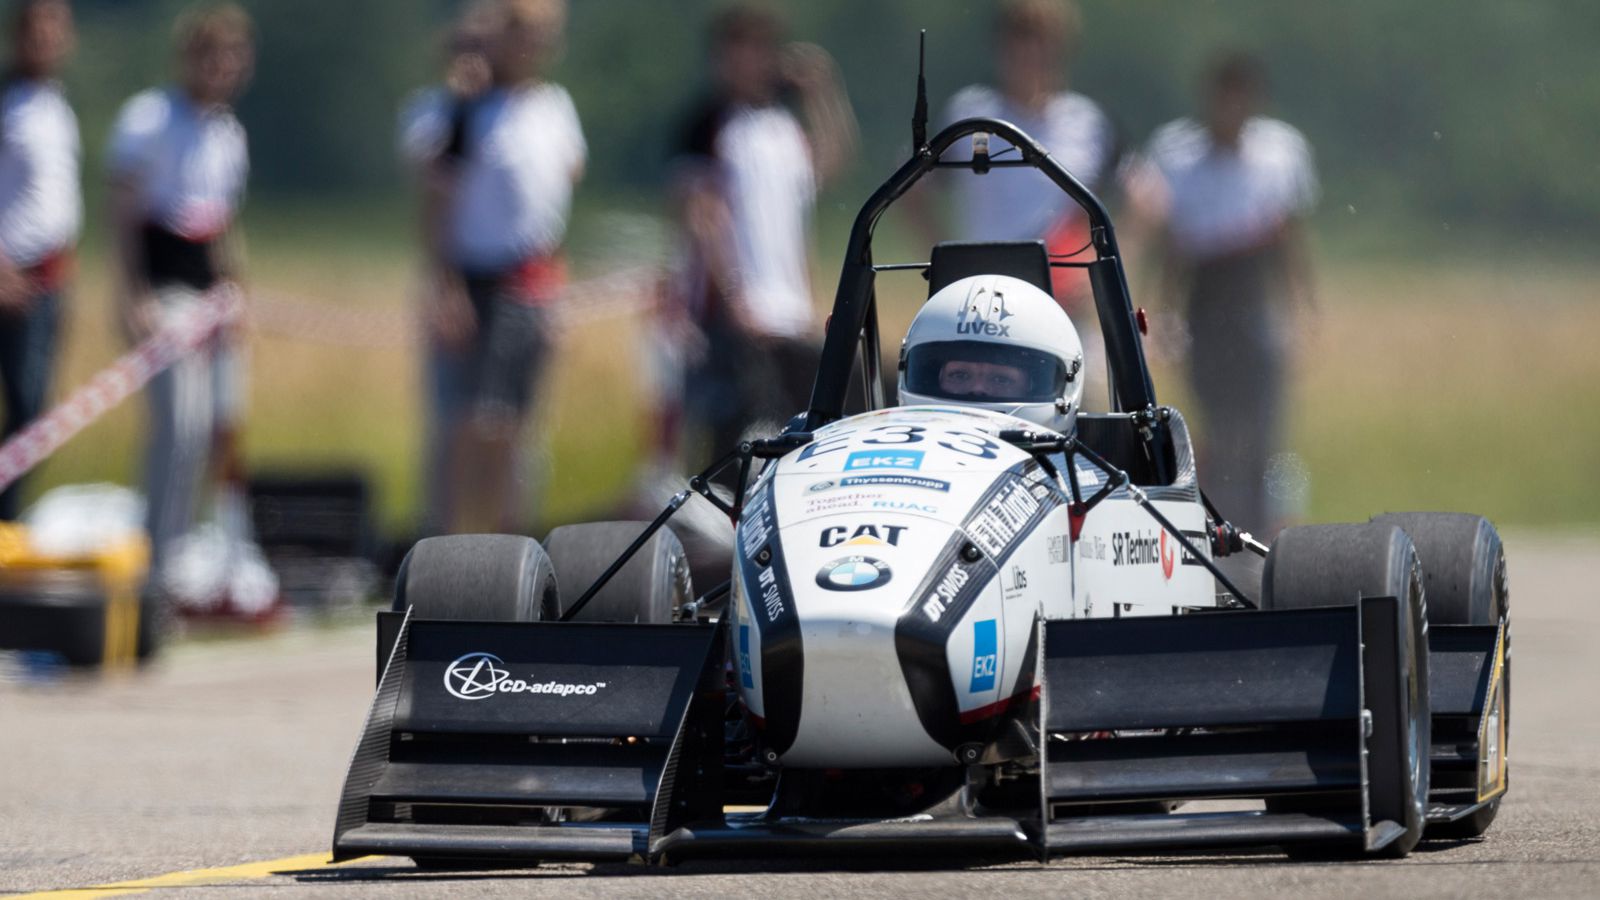 Carro de corrida elétrico bate recorde mundial de velocidade